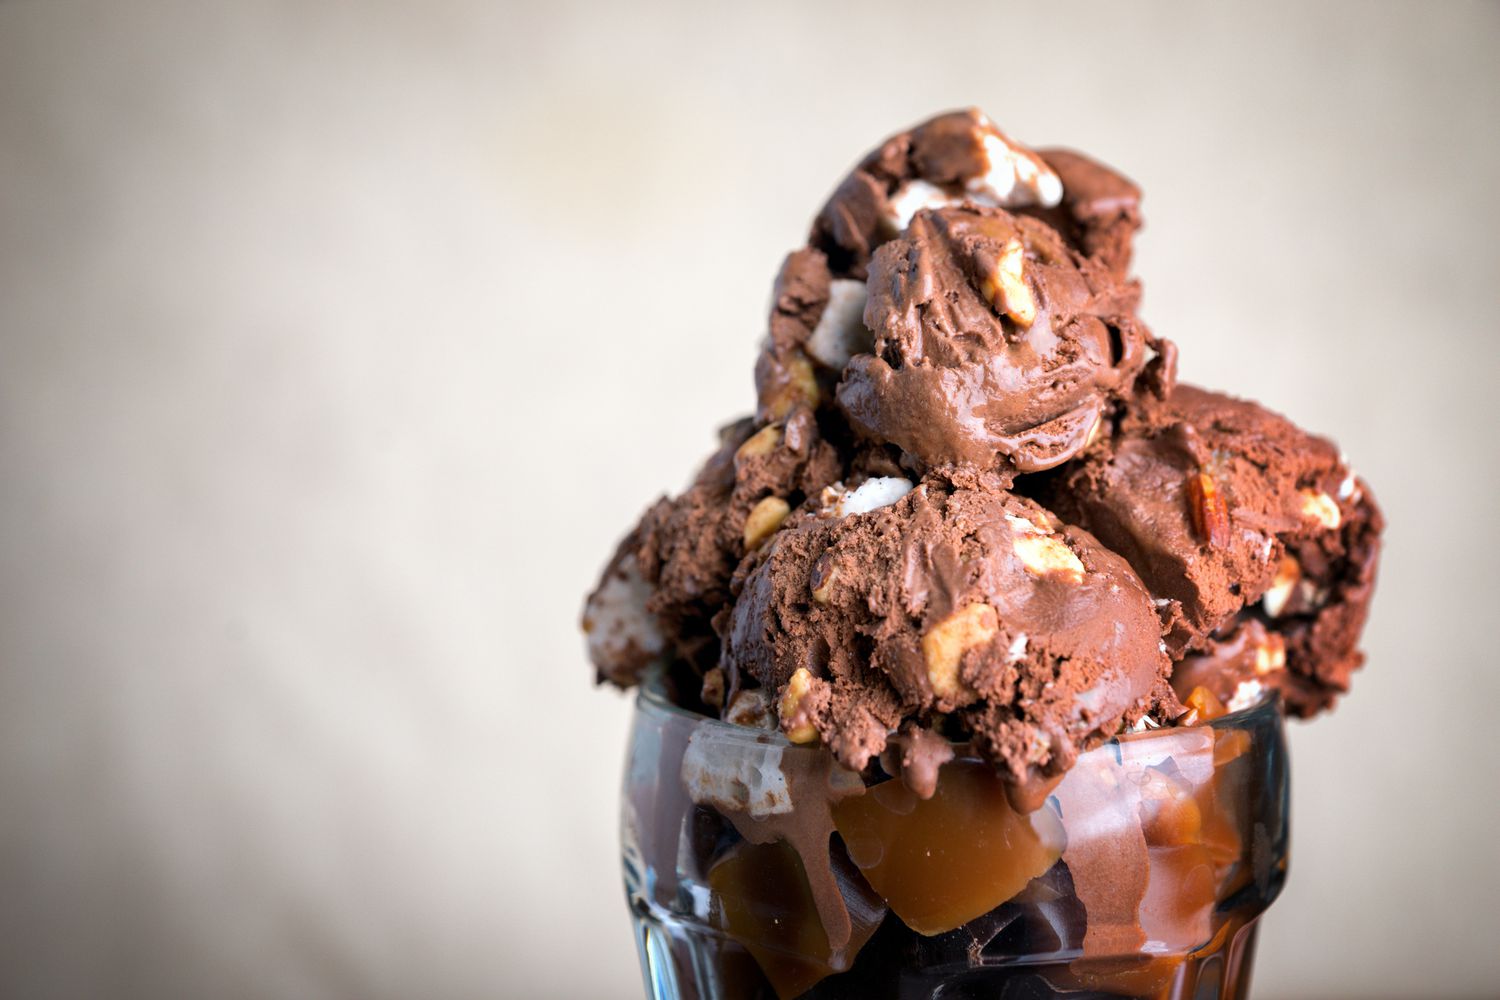 Rocky road ice cream in a sundae glass